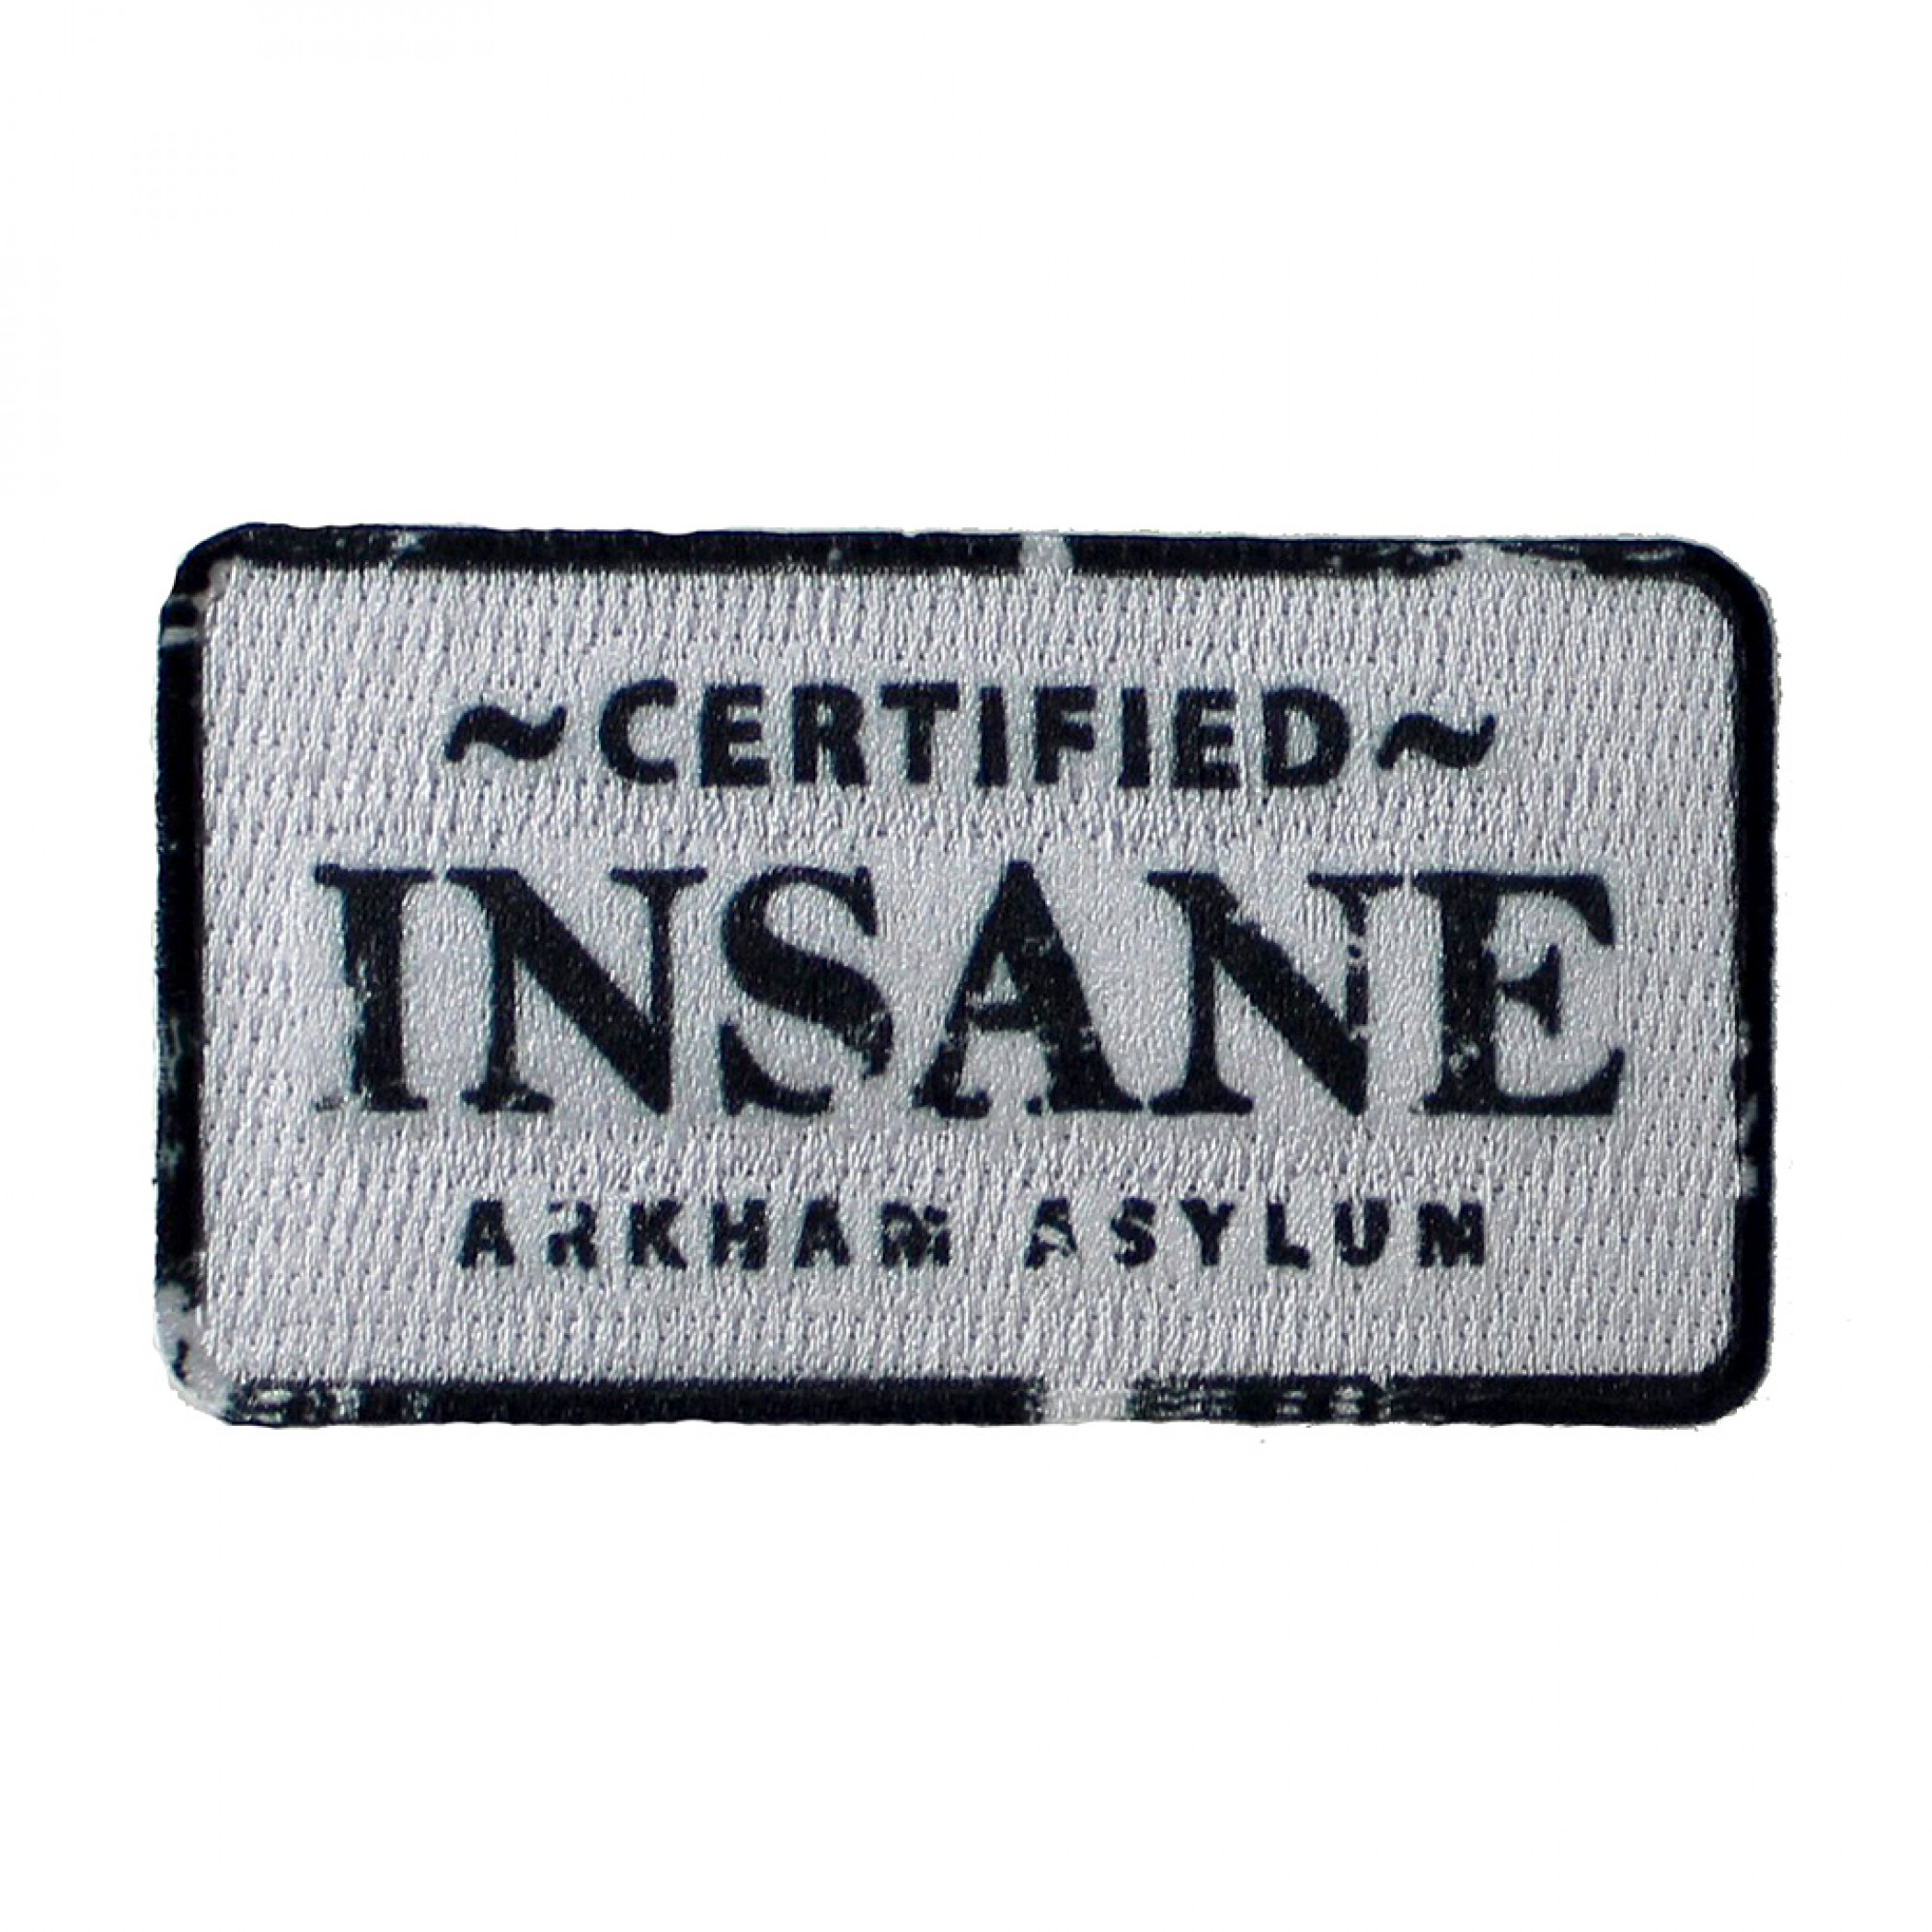 Gotham City Certified Insane Arkham Asylum Patch